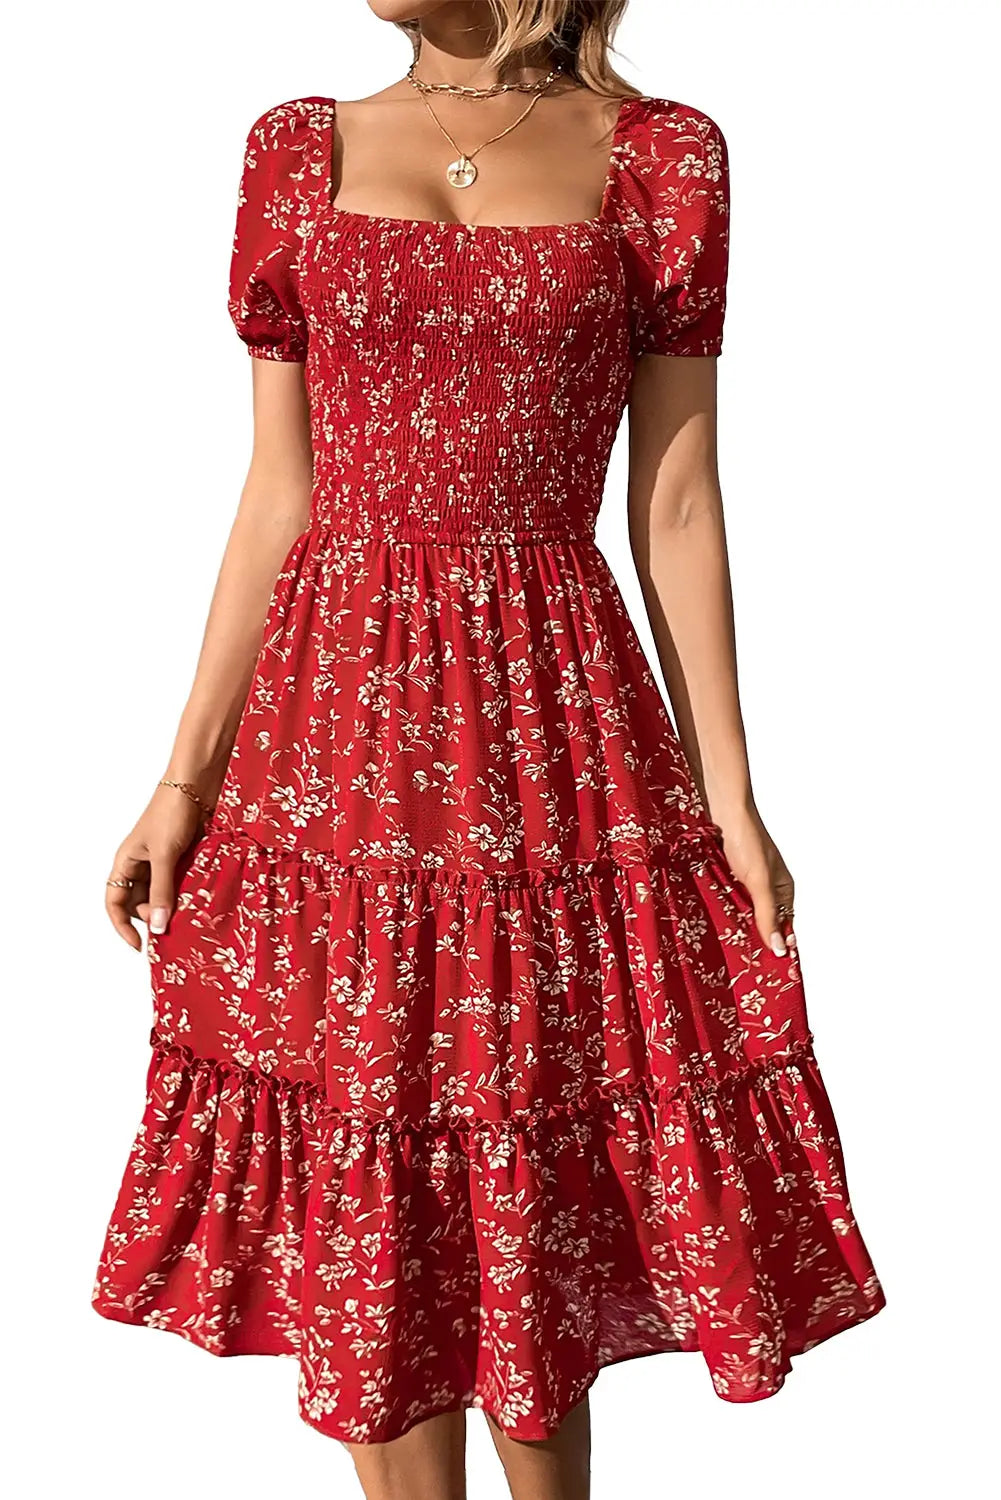 Red boho flower smocked square neck tiered midi floral dress - dresses